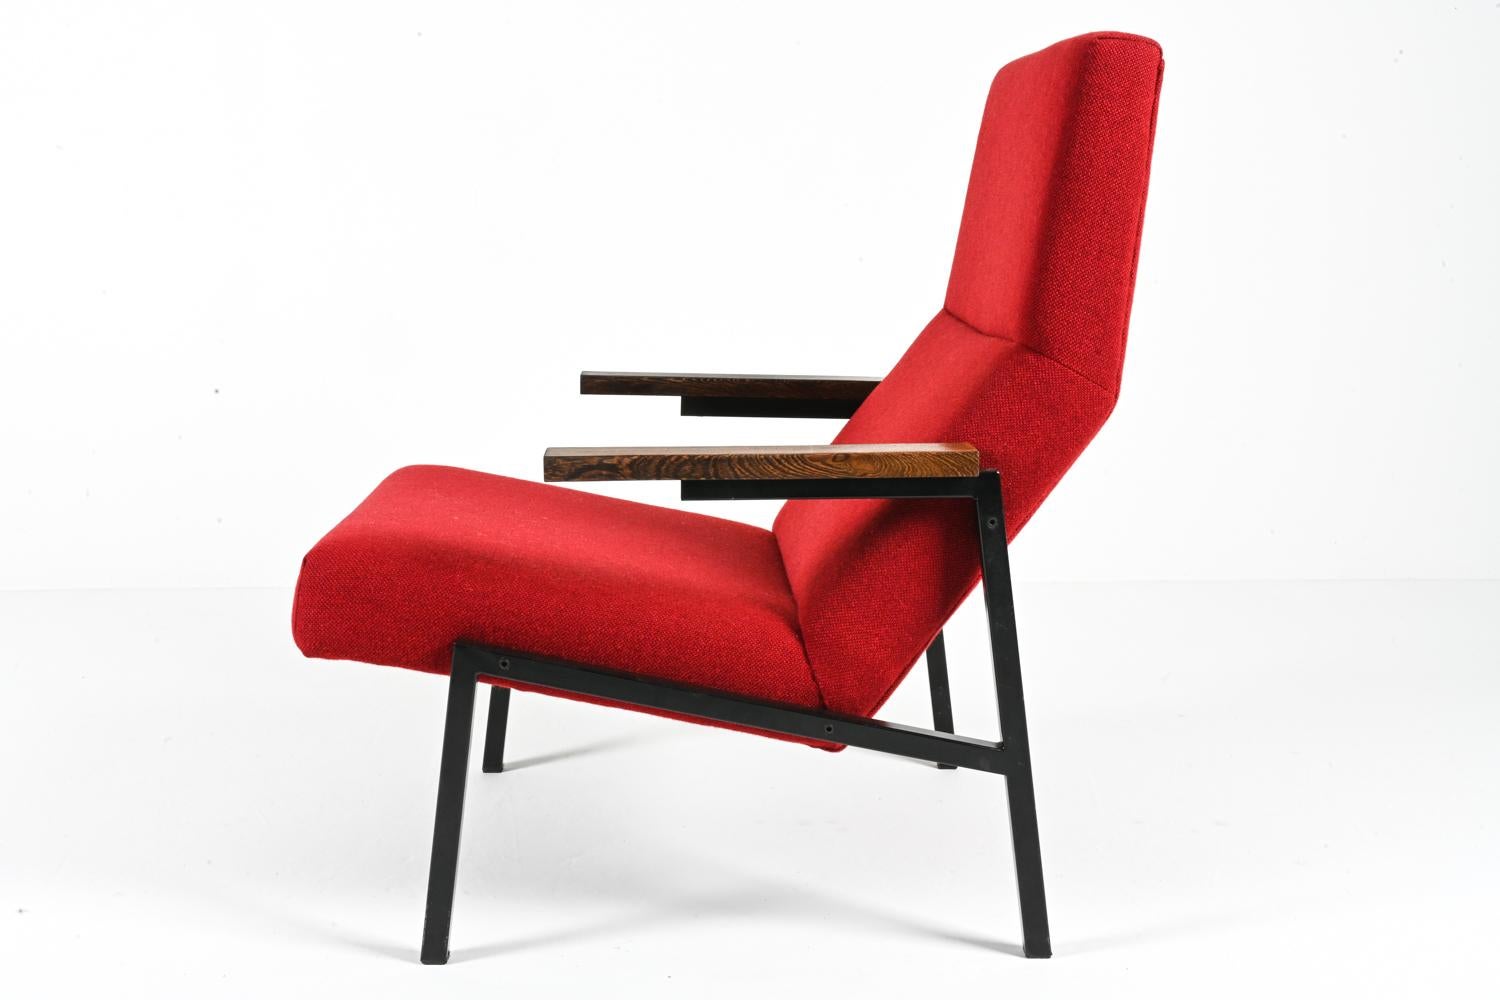 Steel Martin Visser for 't Spectrum SZ 67 Lounge Chair For Sale